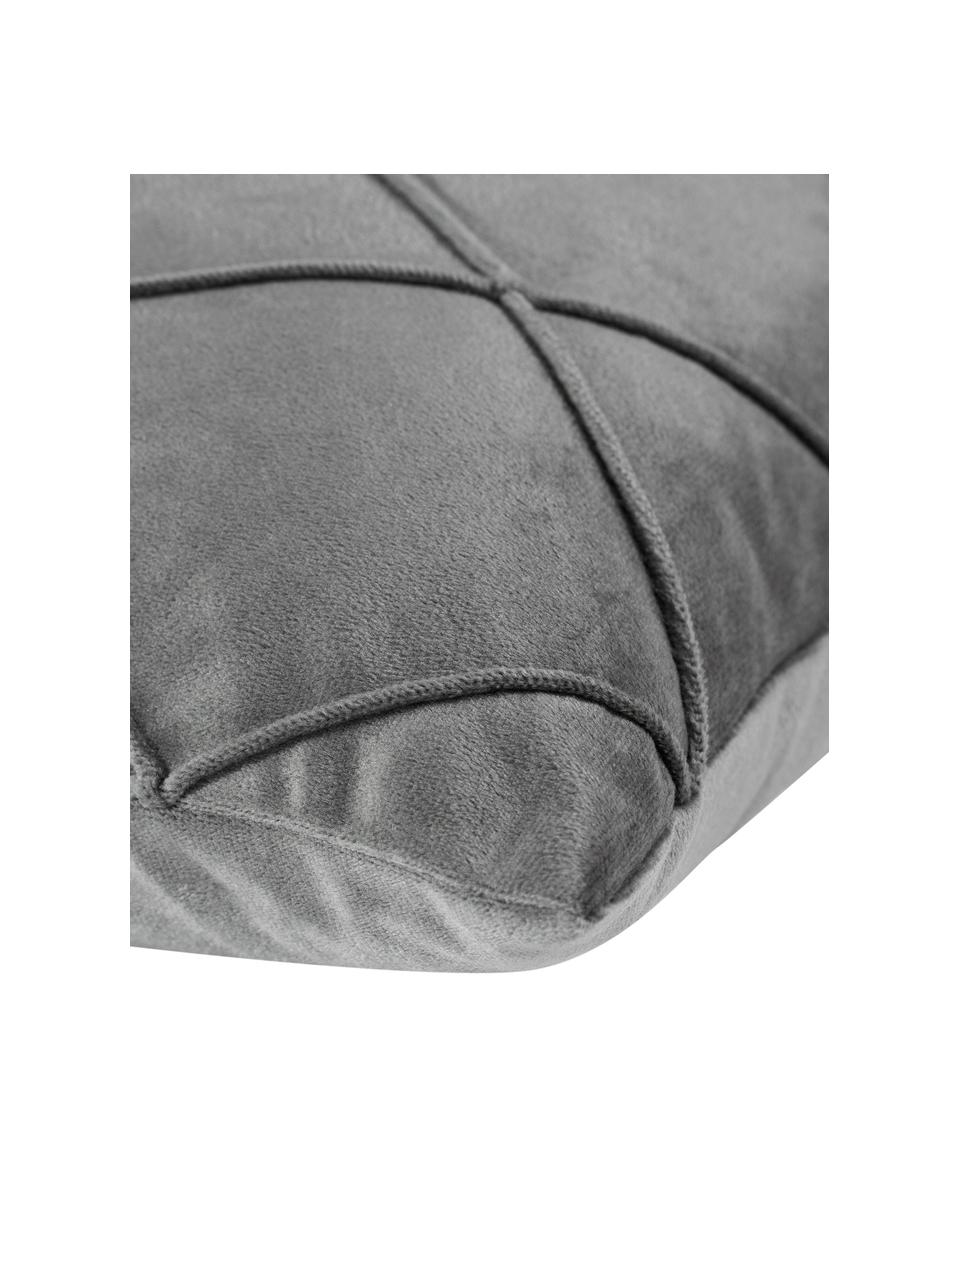 Samt-Kissenhülle Nobless in Grau mit erhabenem Rautenmuster, 100% Polyestersamt, grau, B 40 x L 40 cm